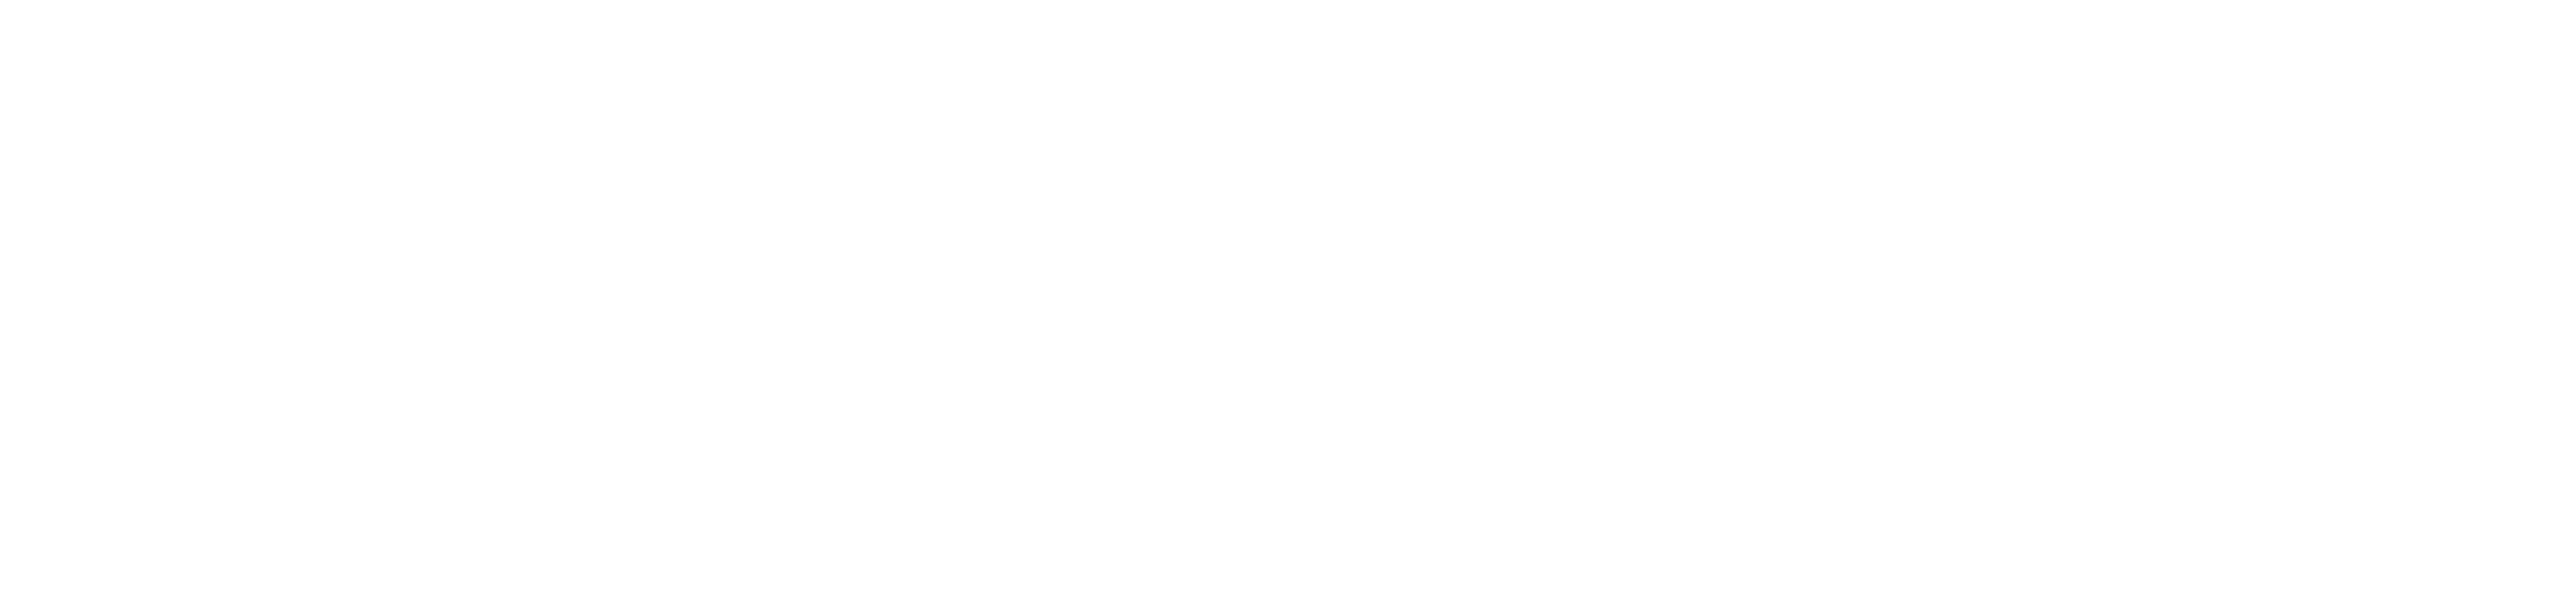 106.3 NBZ-FM Logo